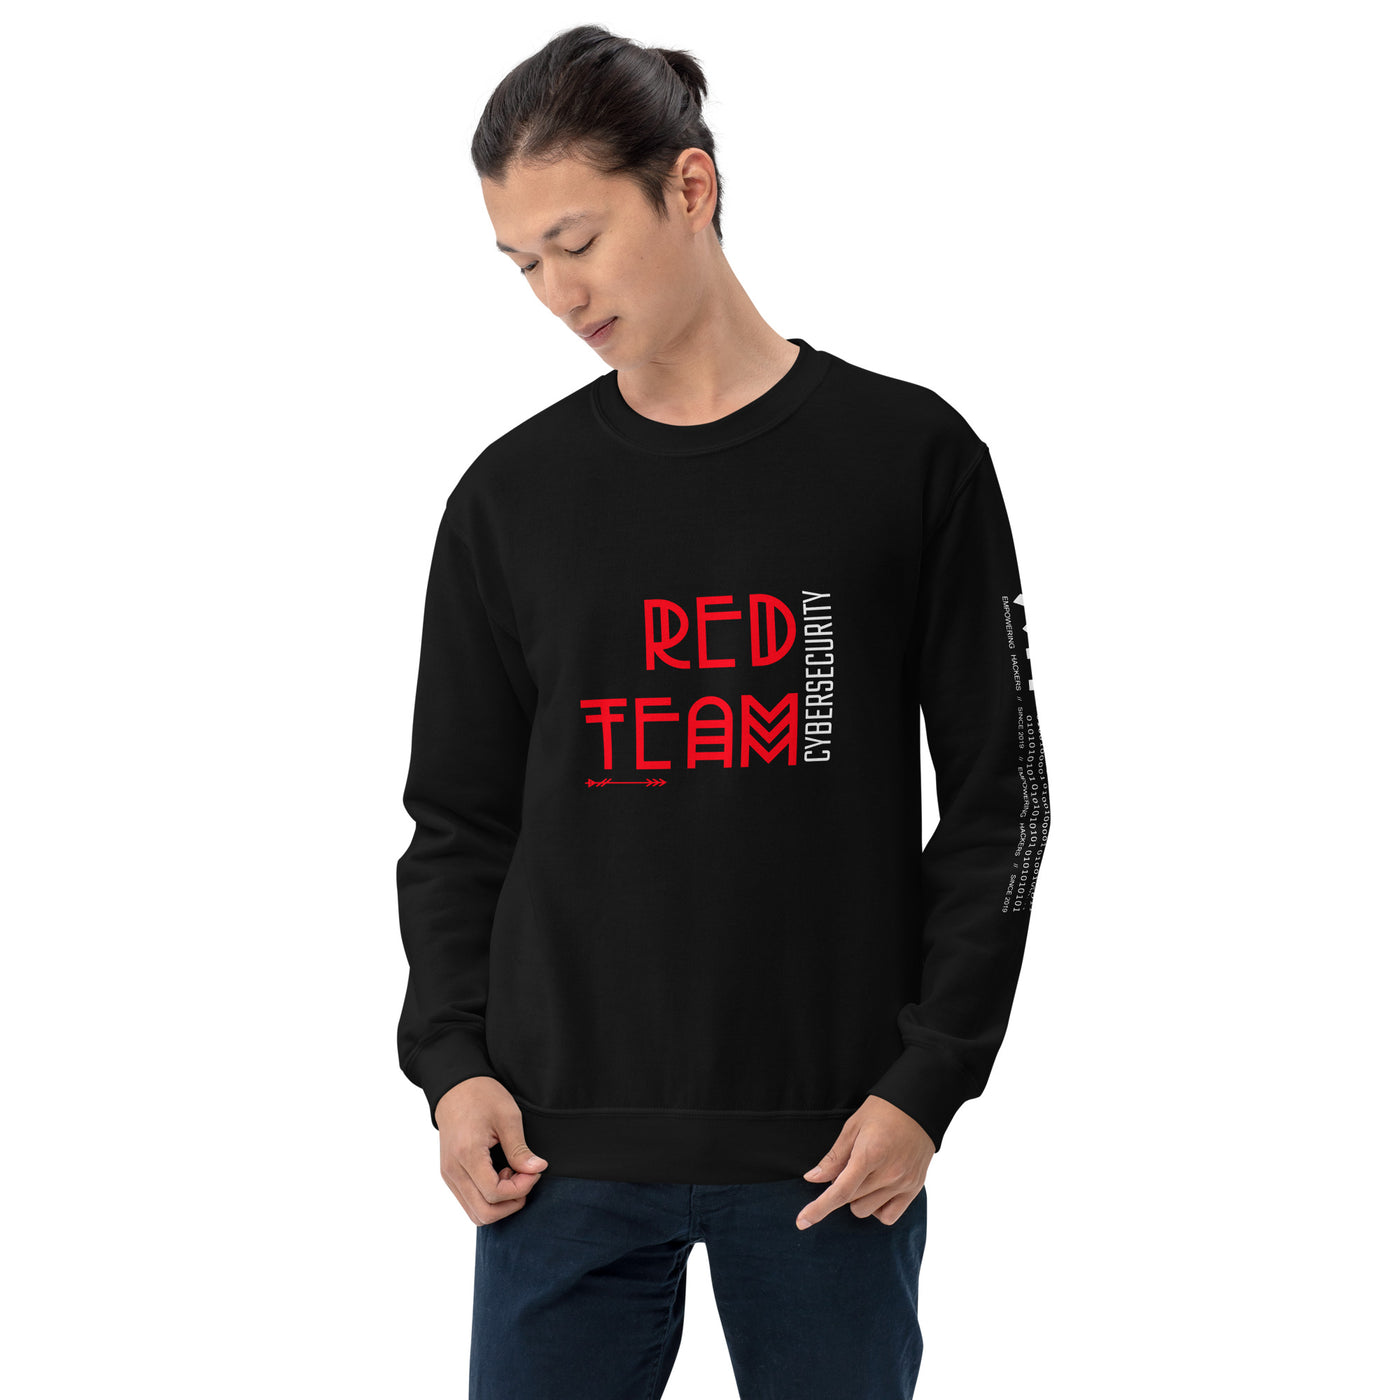 Cyber Security Red Team V5 - Unisex Sweatshirt